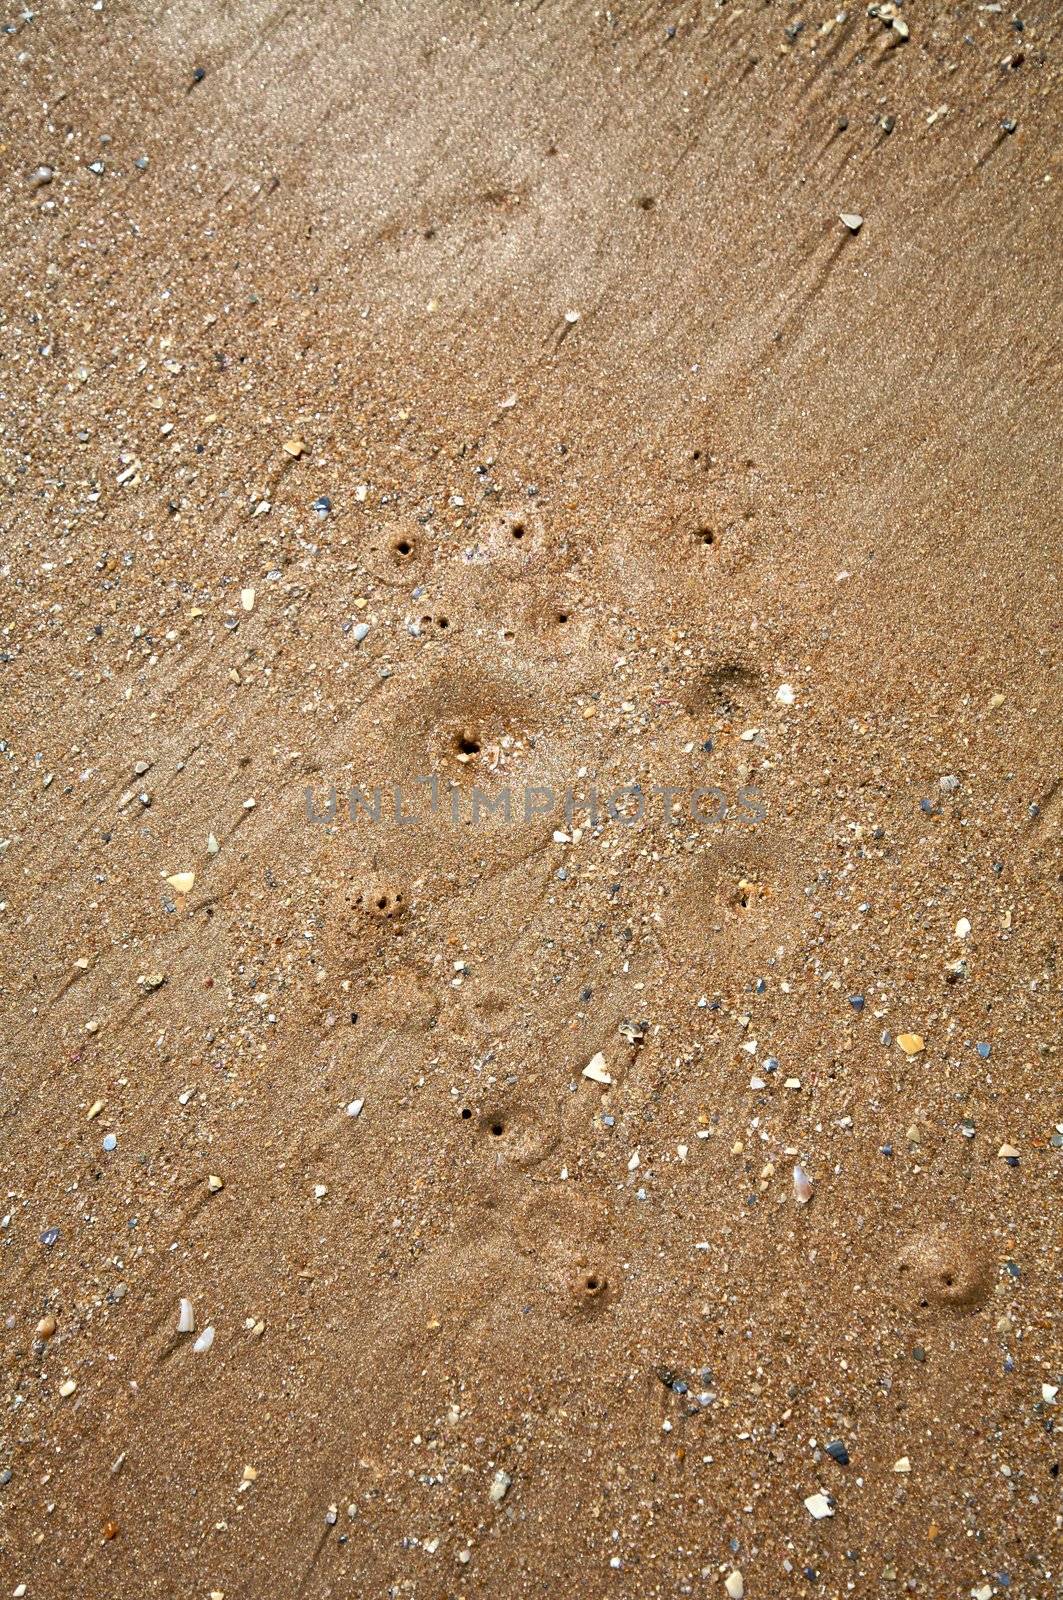 holes to breath animals on the beach sand